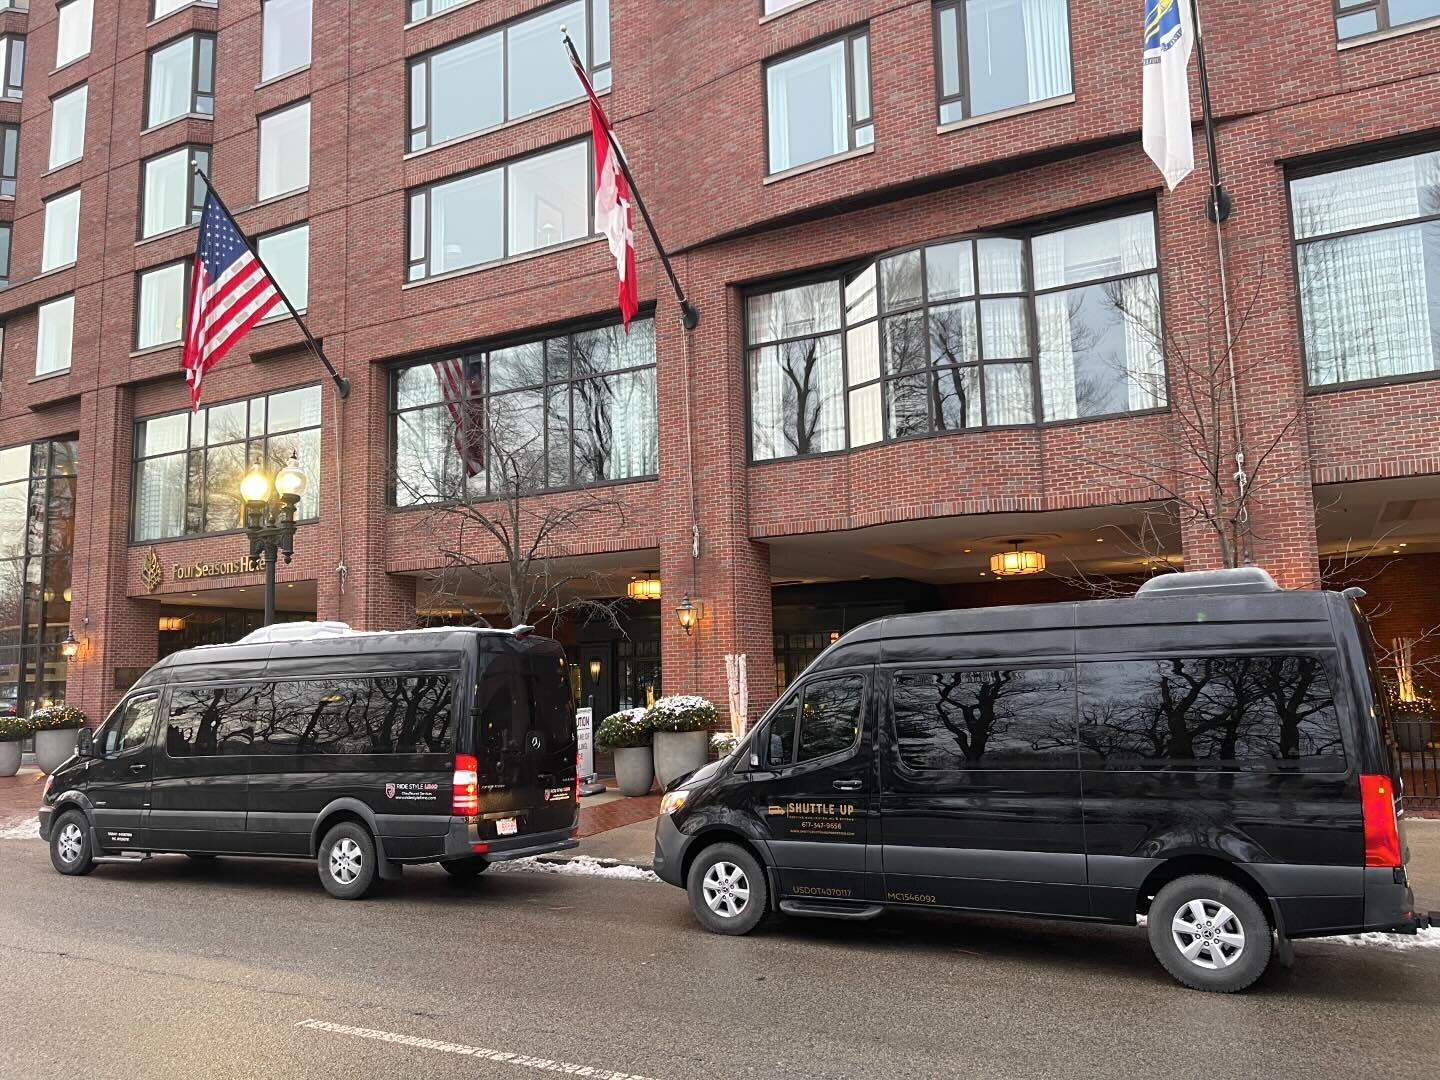 Early morning pickup for this group of 20 executives. #shuttleuptransportation #fourseasonshotel #boston